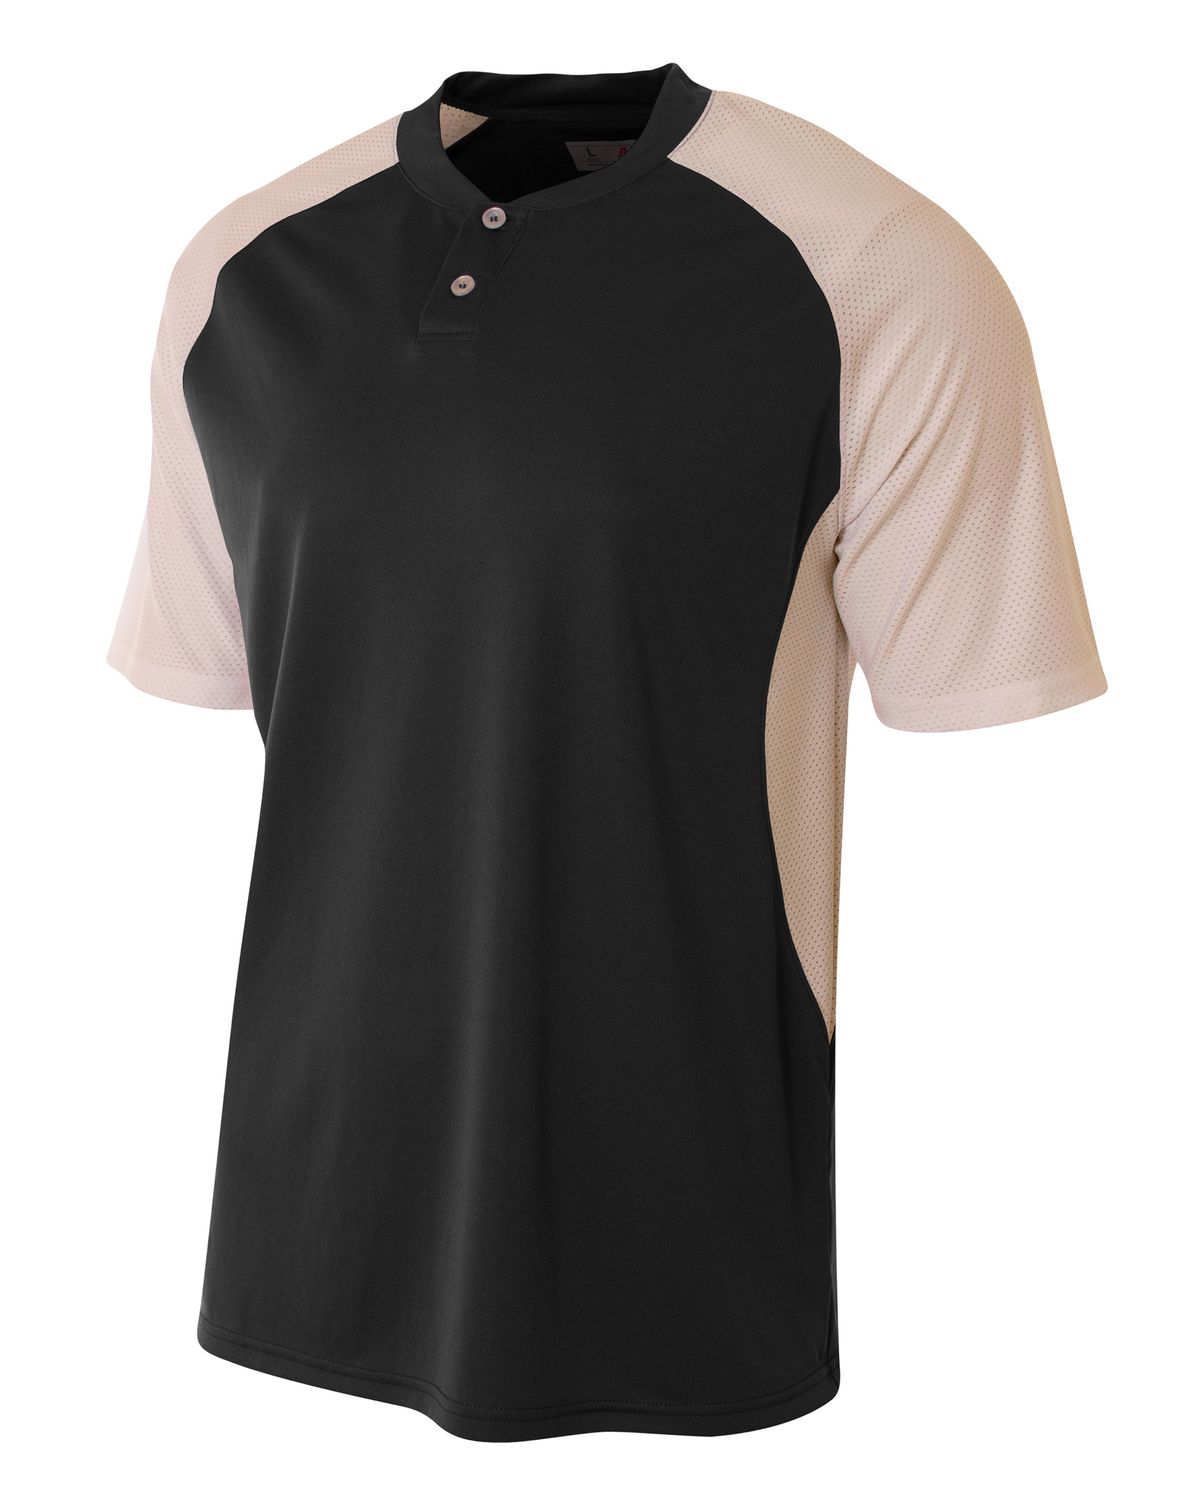 'A4 N3315 Adult Performance Contrast 2 Button Baseball Henley T-Shirt'